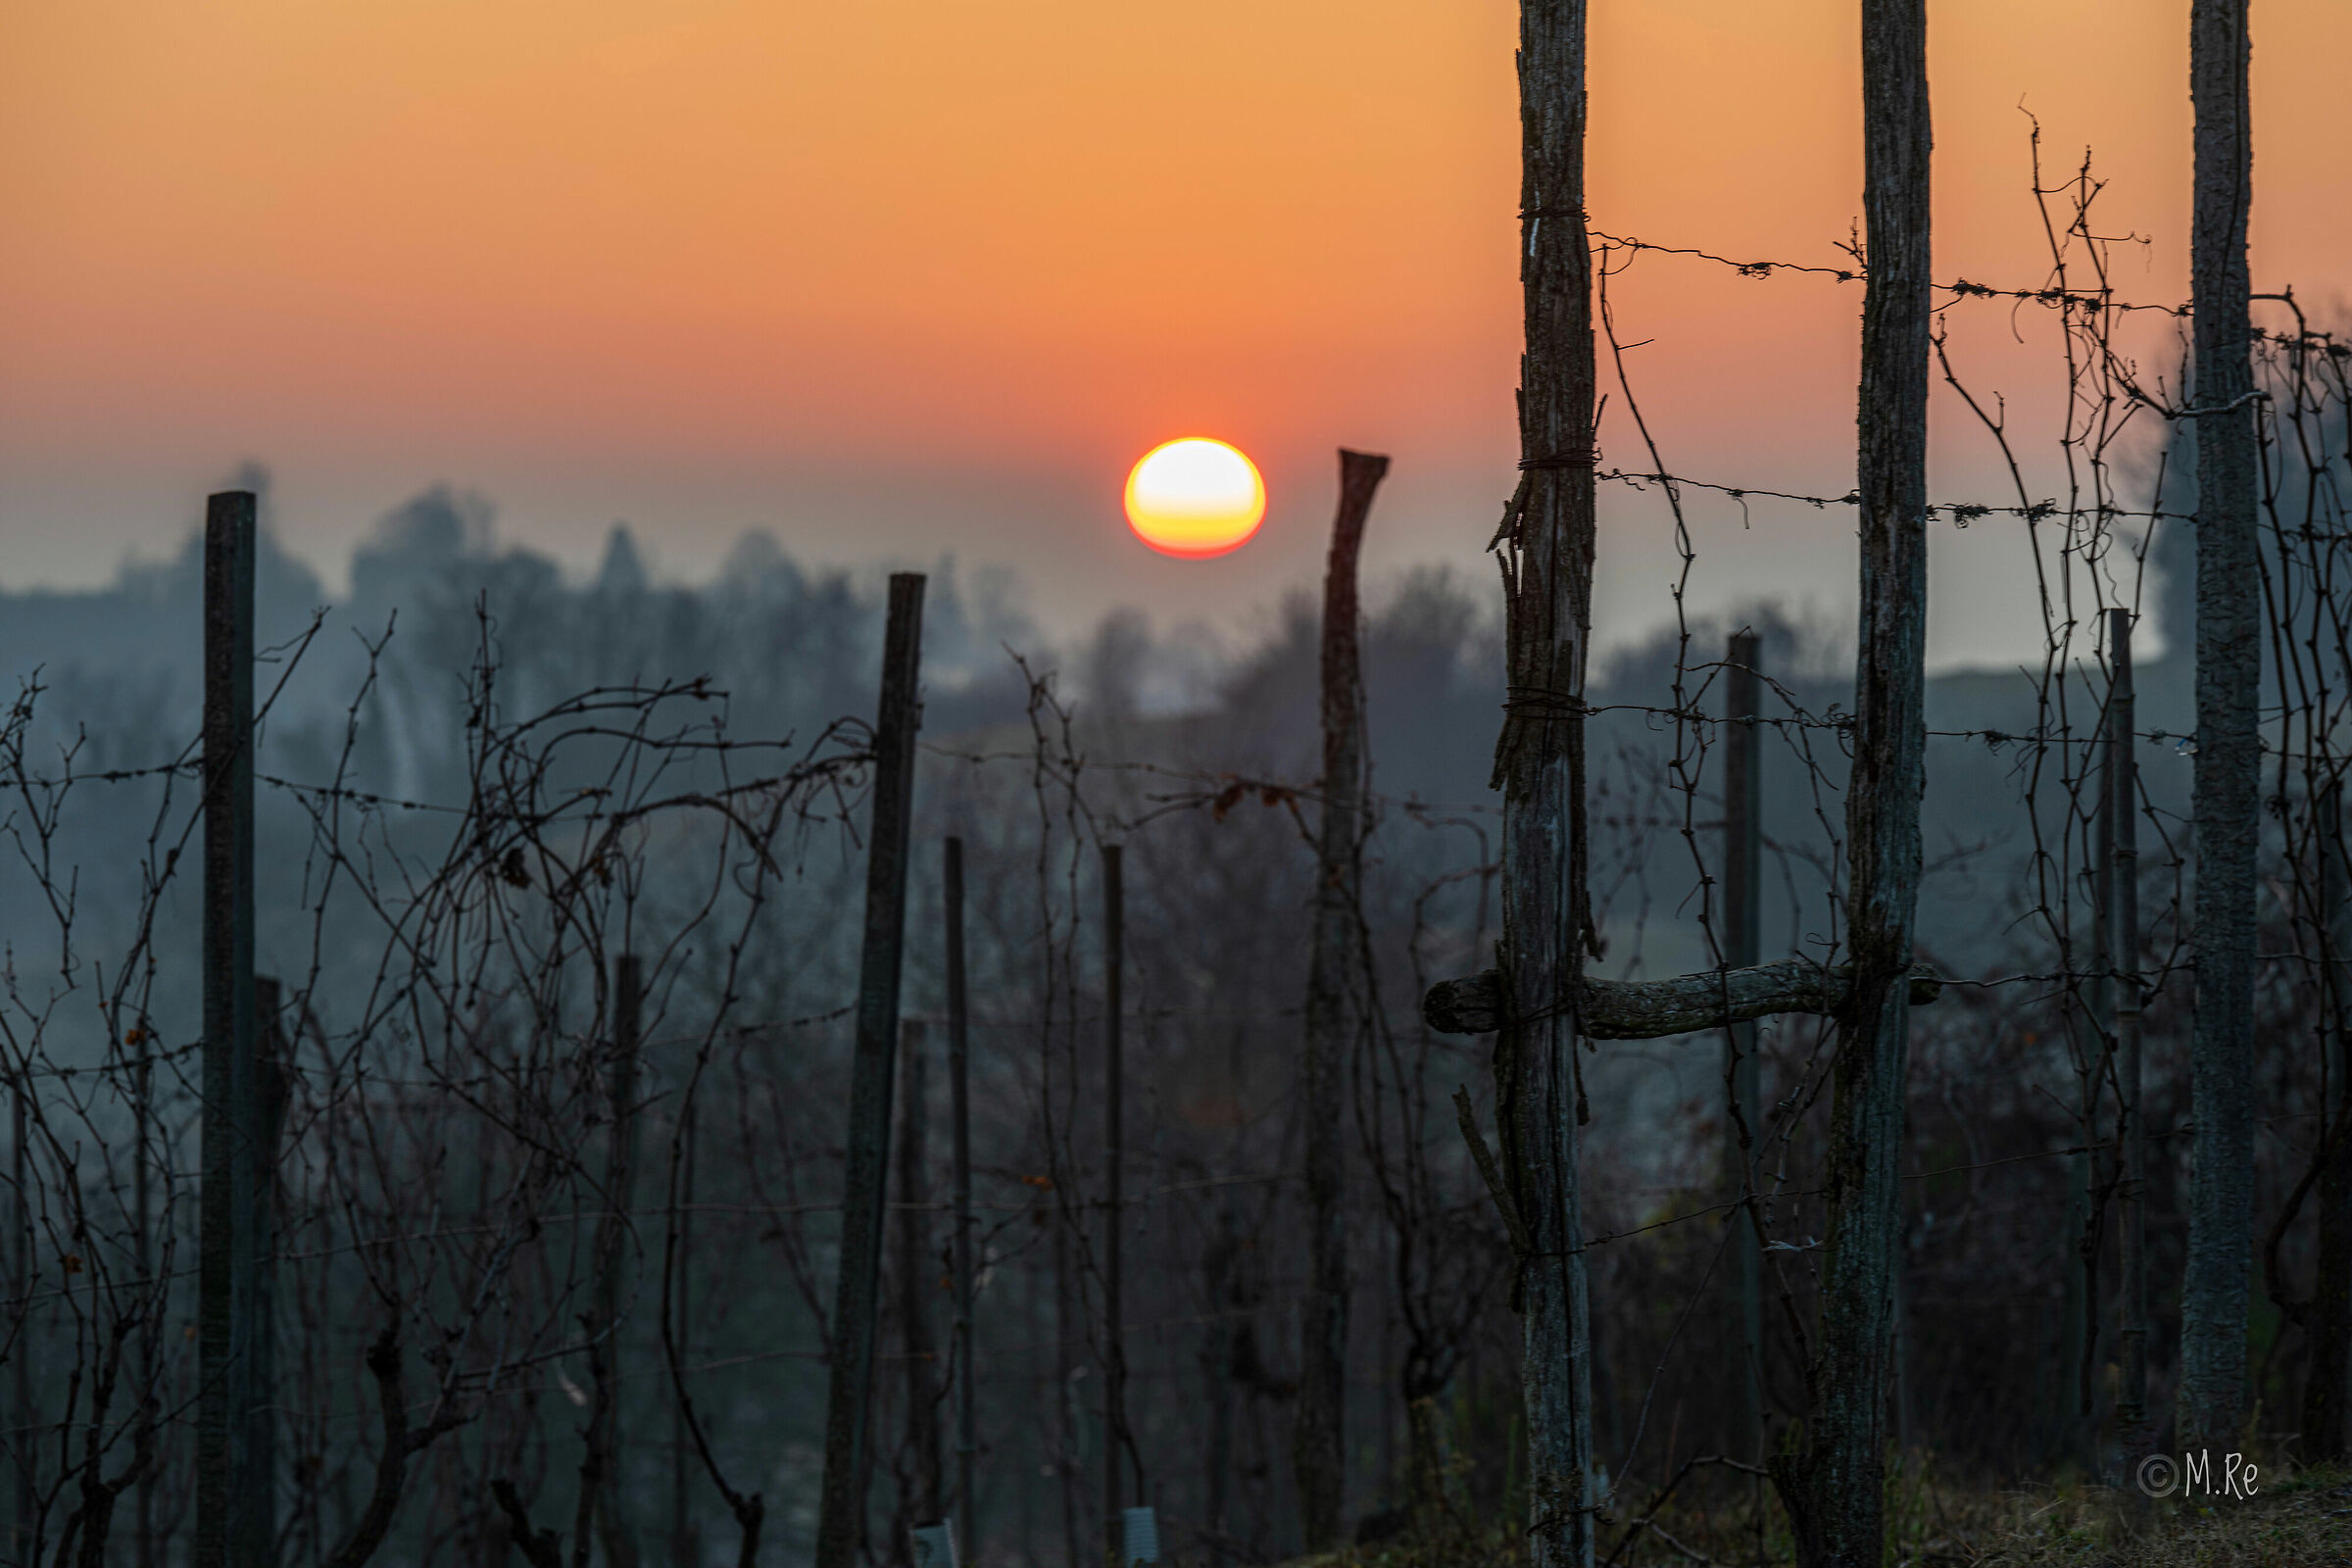 The sun rises through the vineyards...